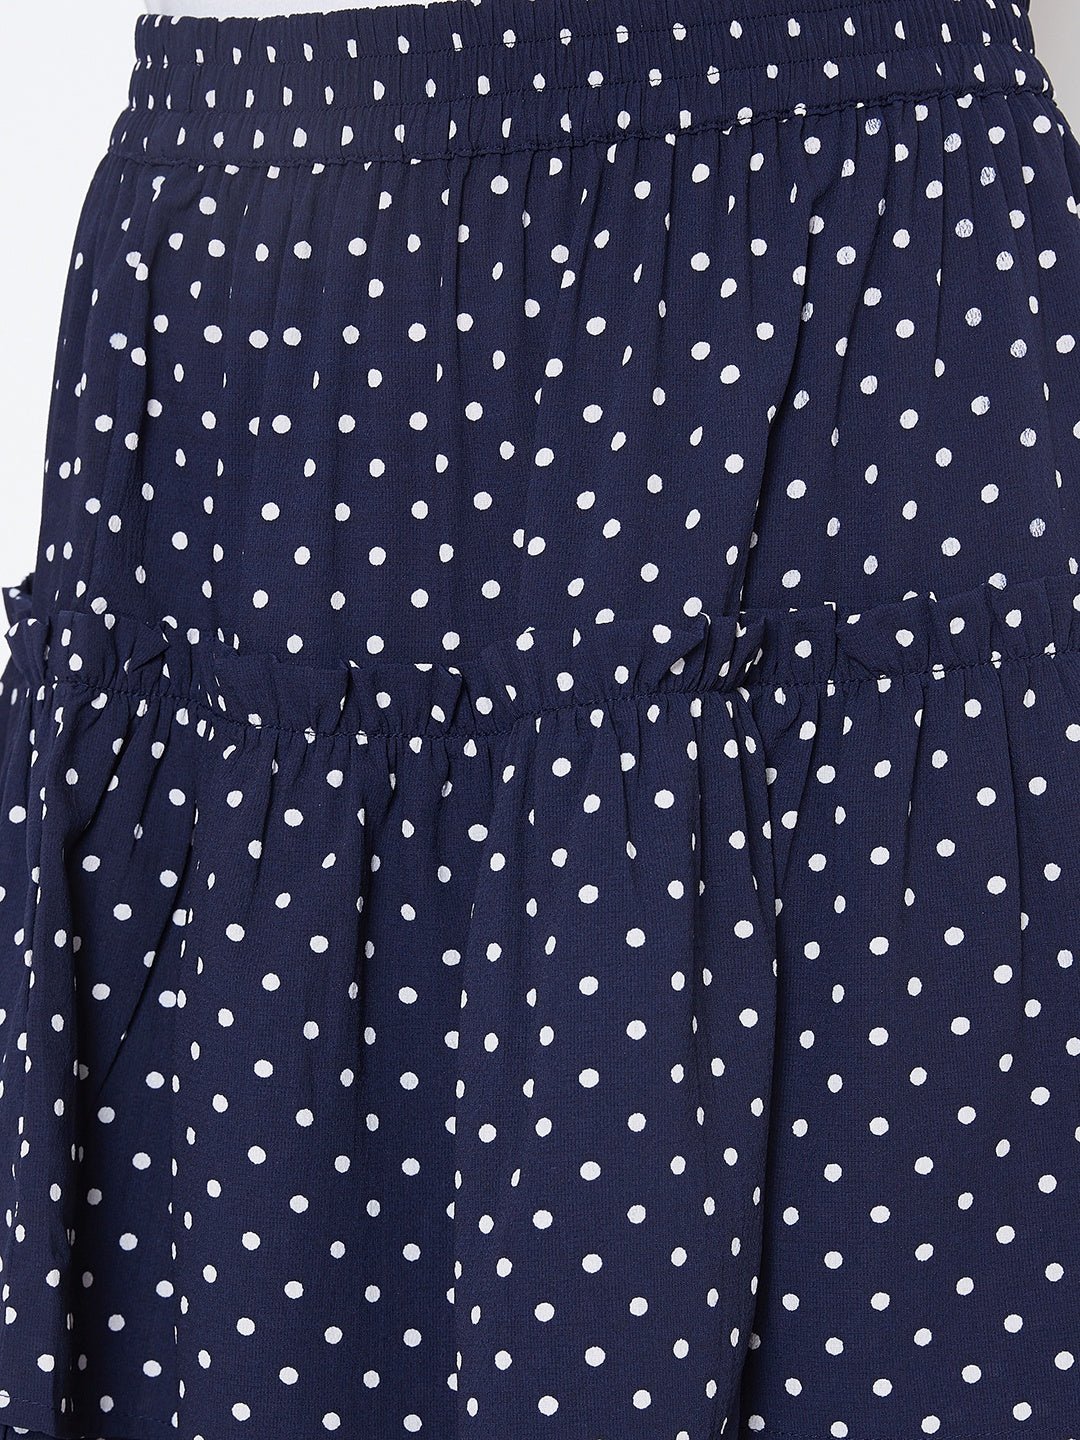 Folk Republic Women Navy Blue Polka Dot Print Layered Slip-On Mini Skirt - #folk republic#